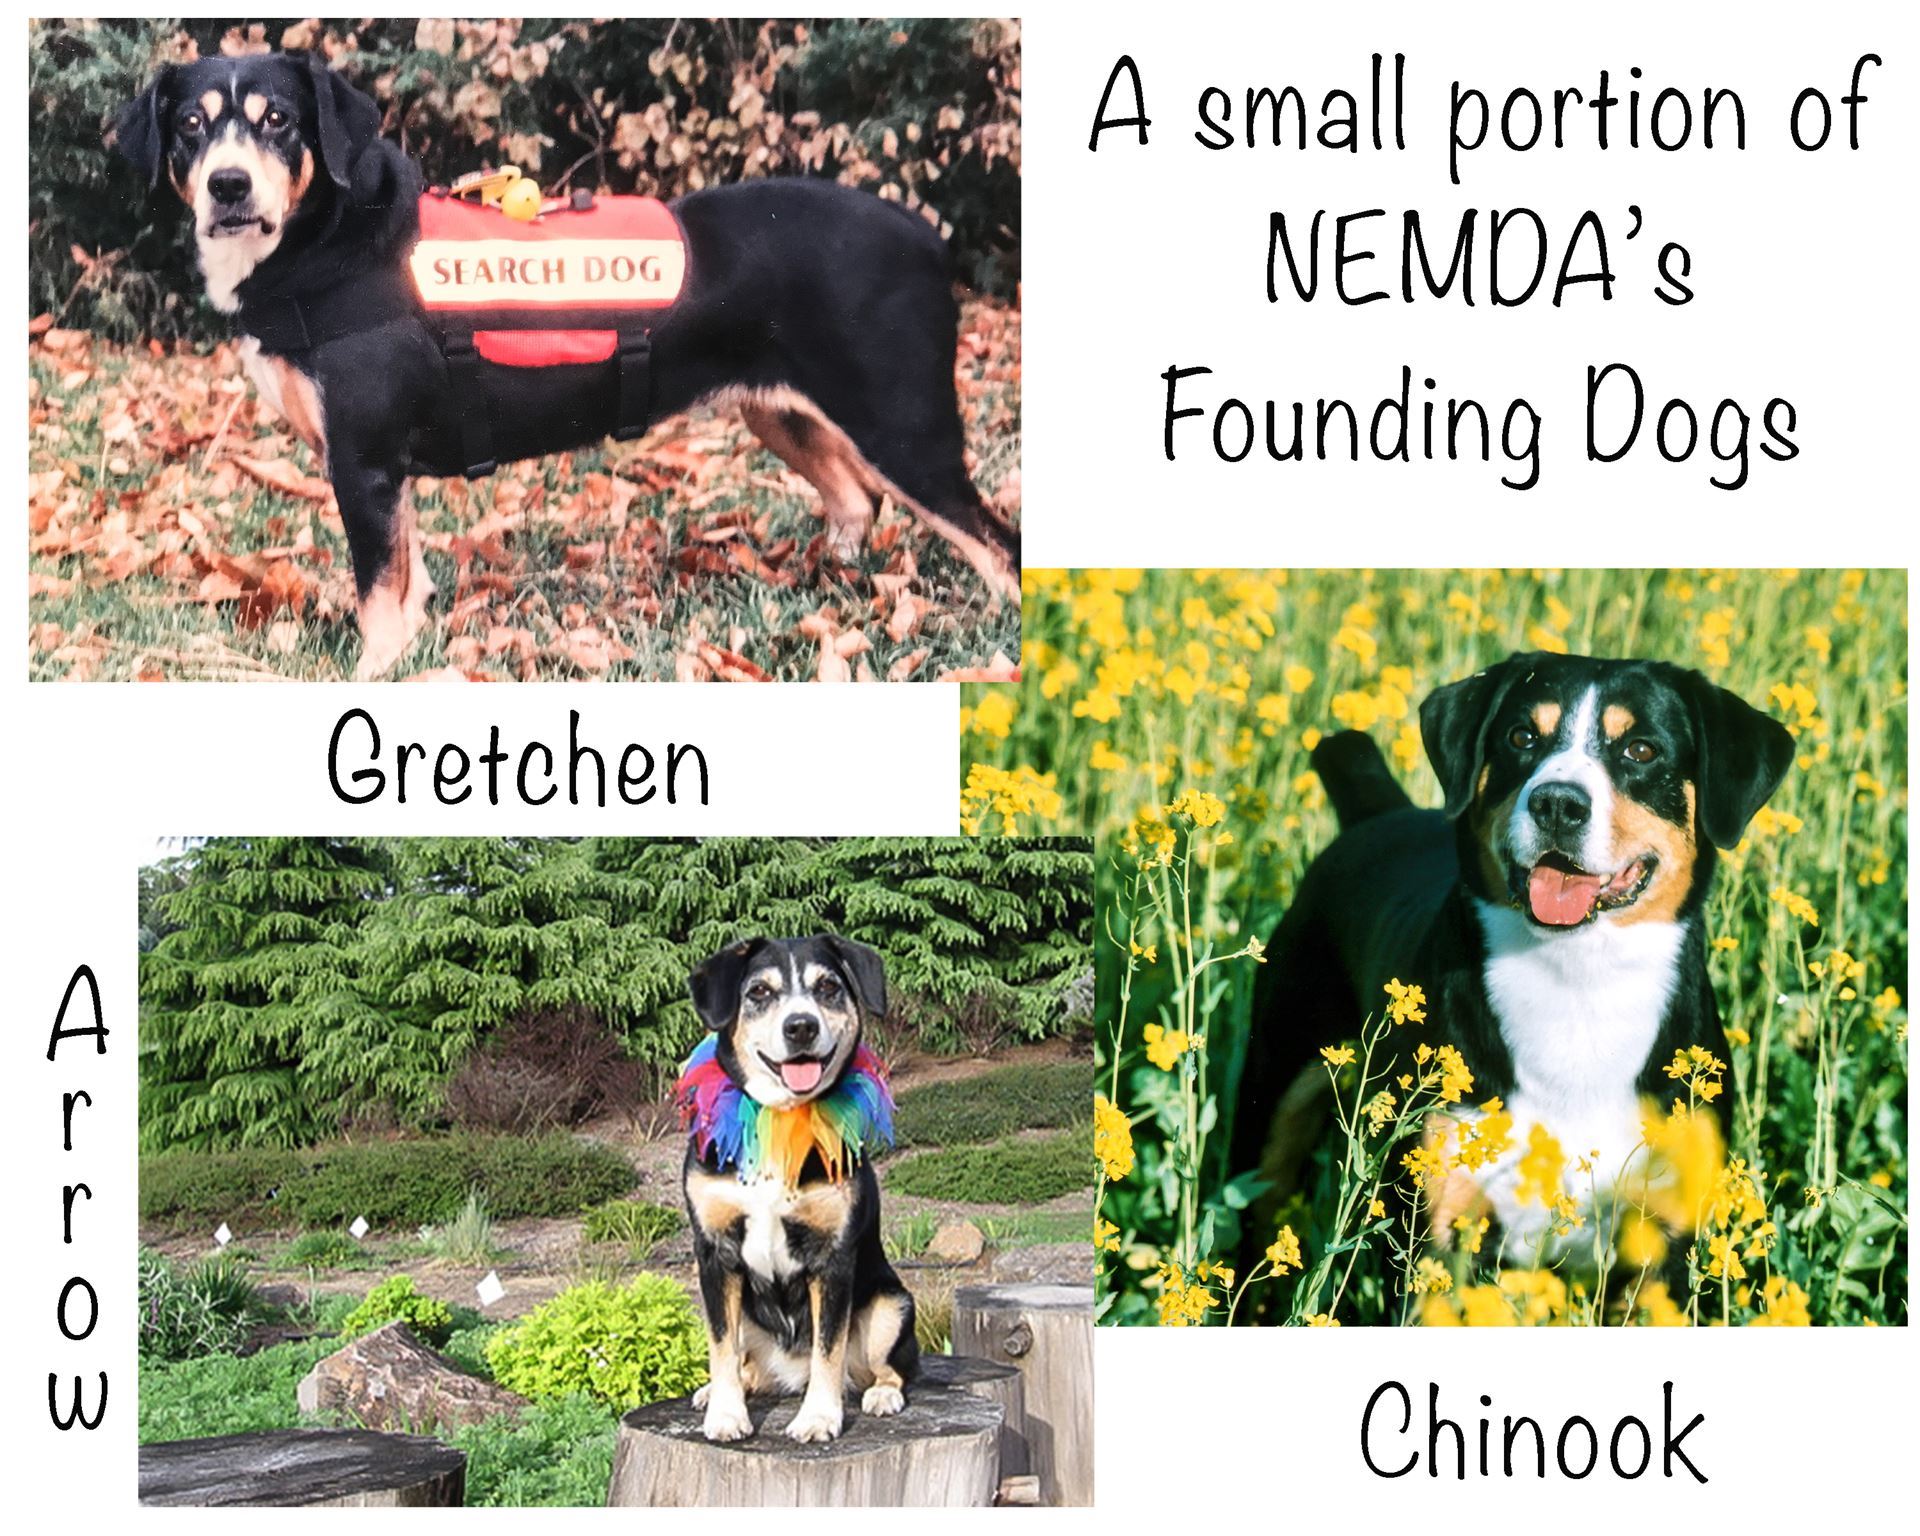 NEMDA Founding Dogs: Gretchen, Chinook and Arrow